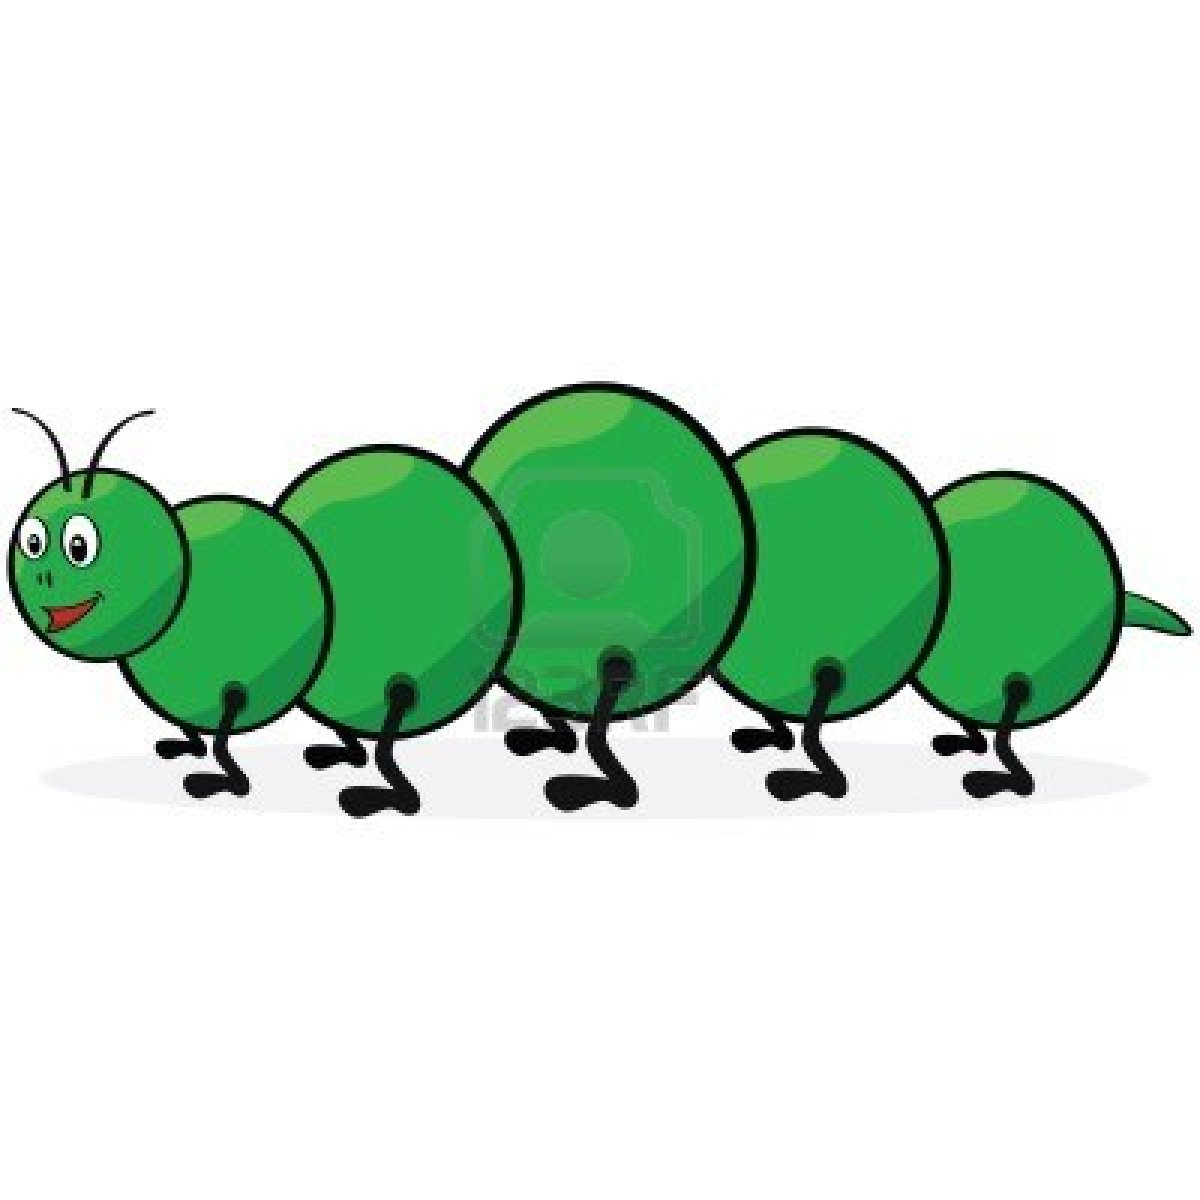 Straight green caterpillar.